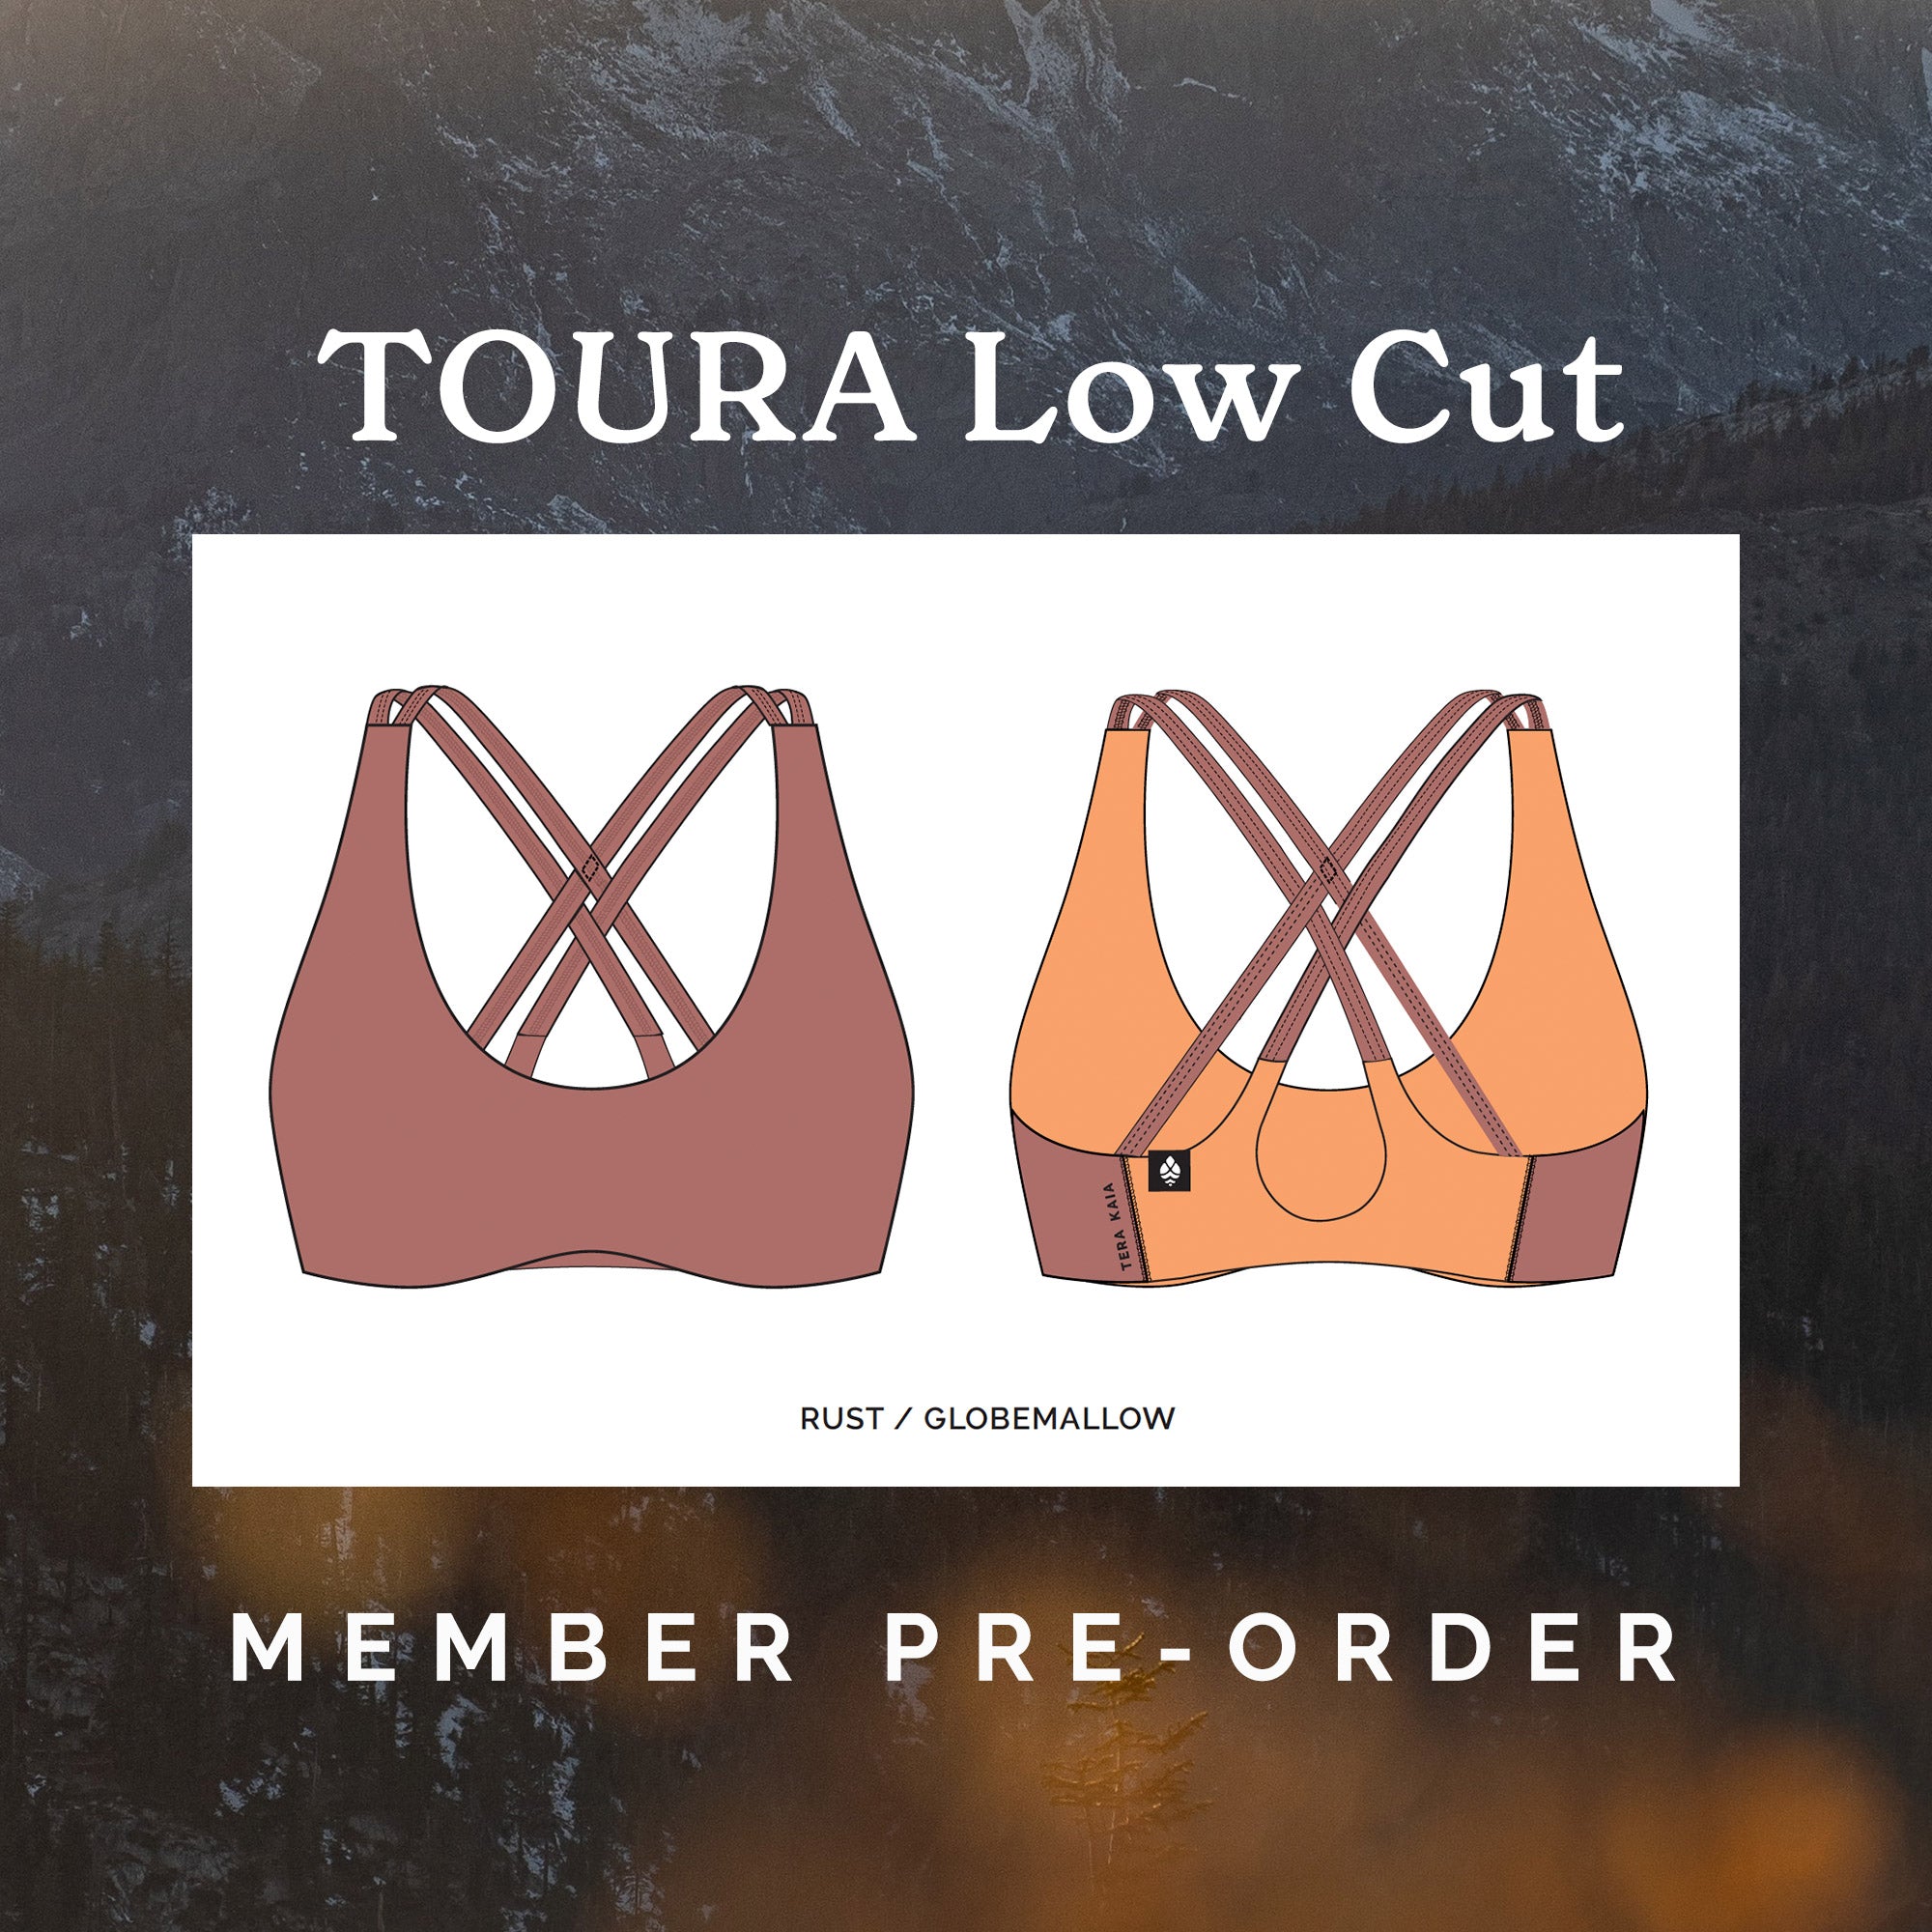 Low Cut | TOURA Basewear Top